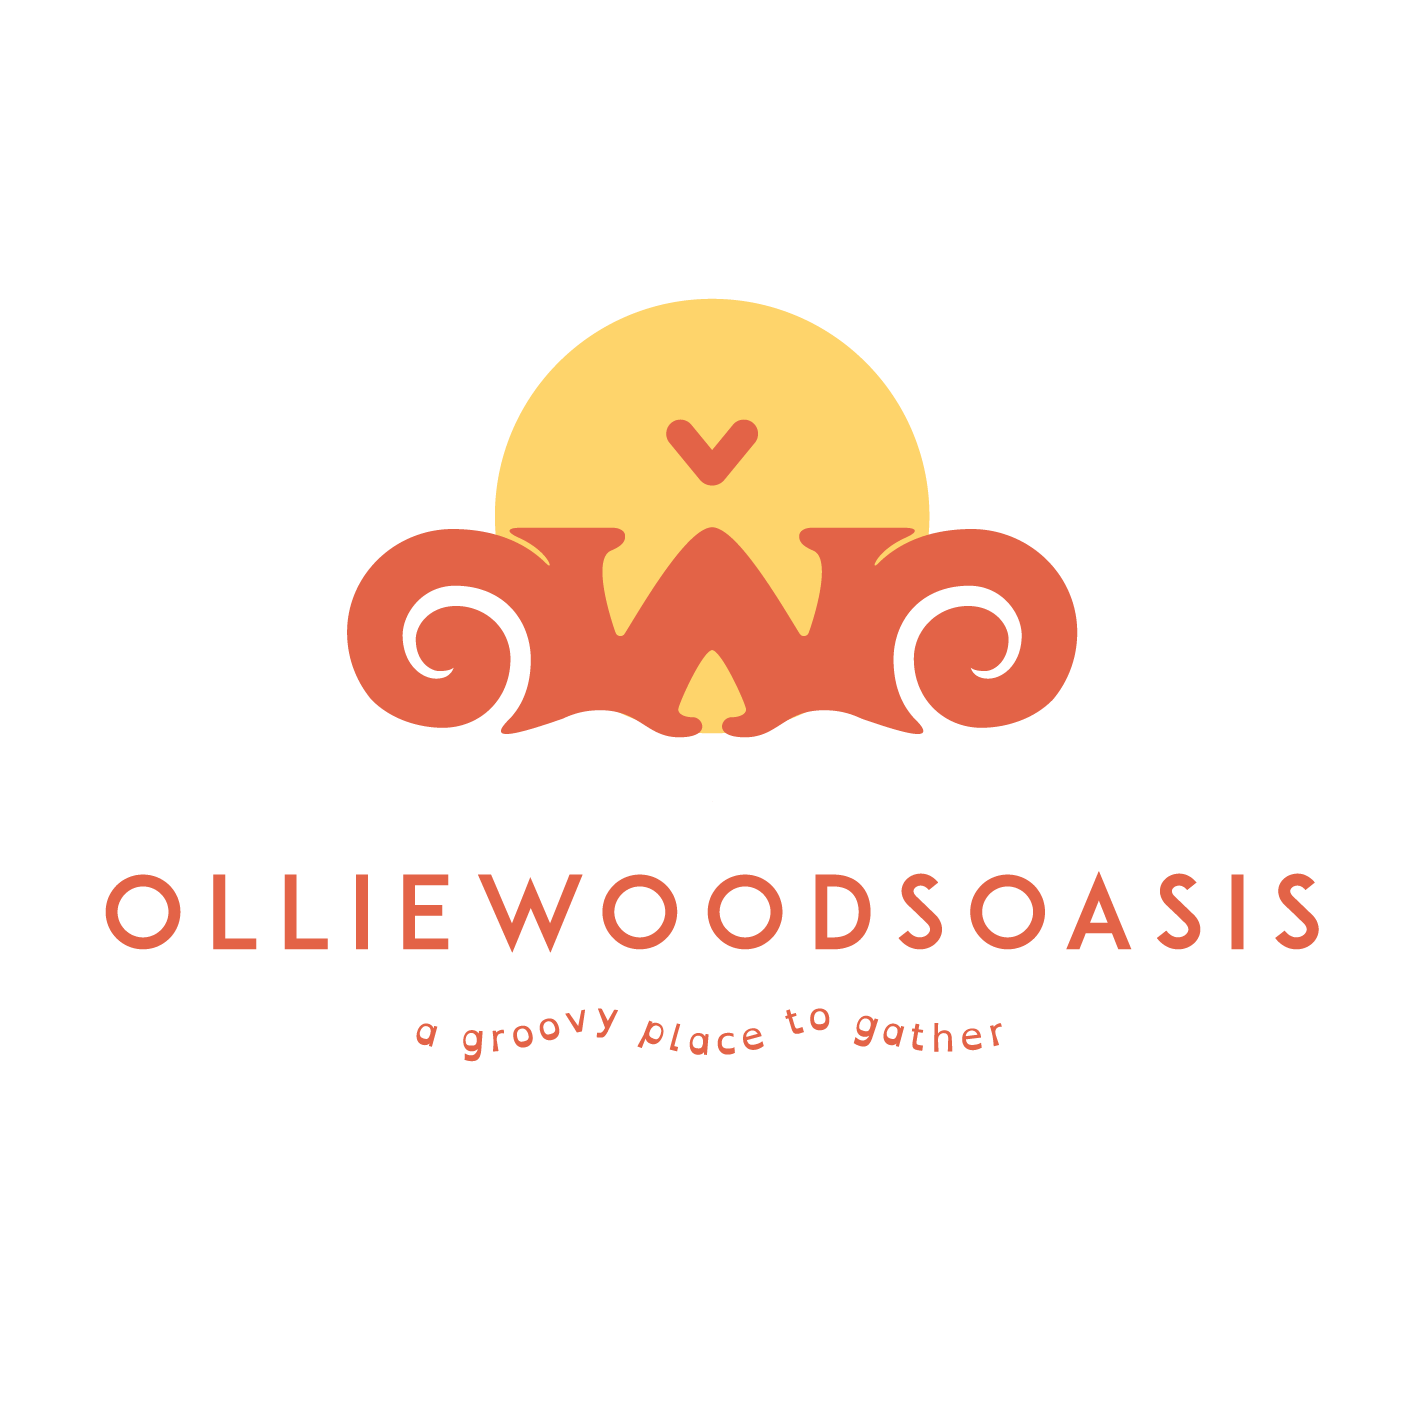 Olliewoods Oasis logo